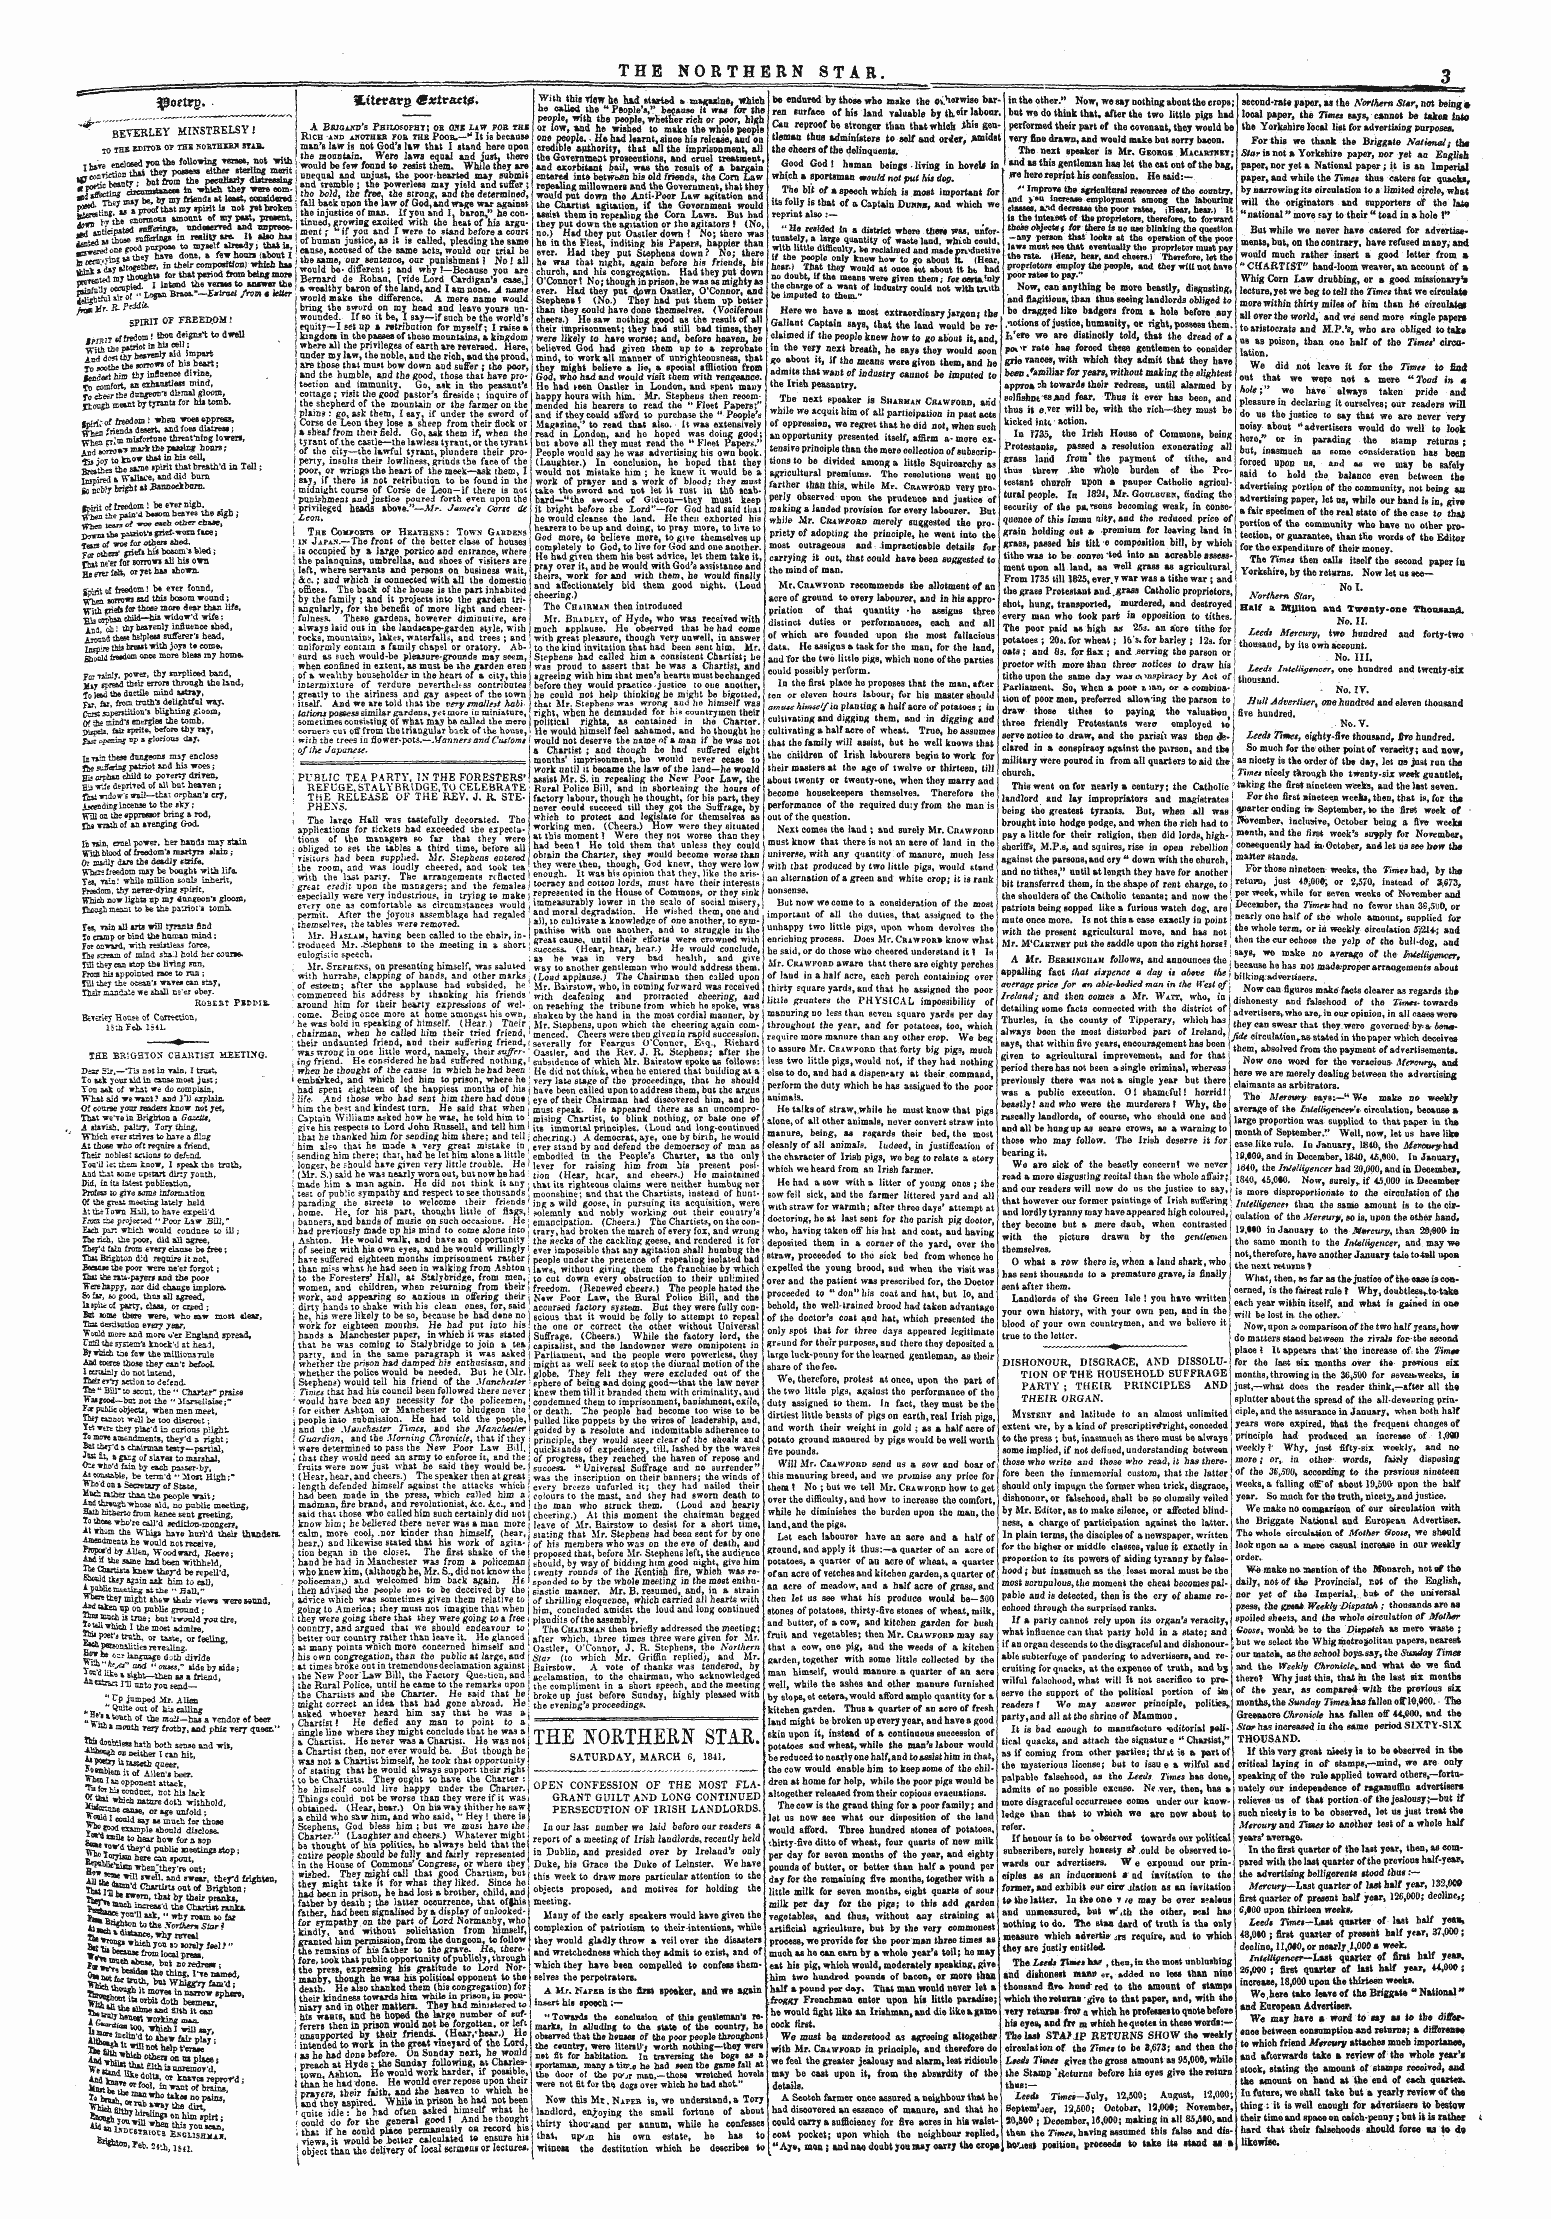 Northern Star (1837-1852): jS F Y, 3rd edition: 3